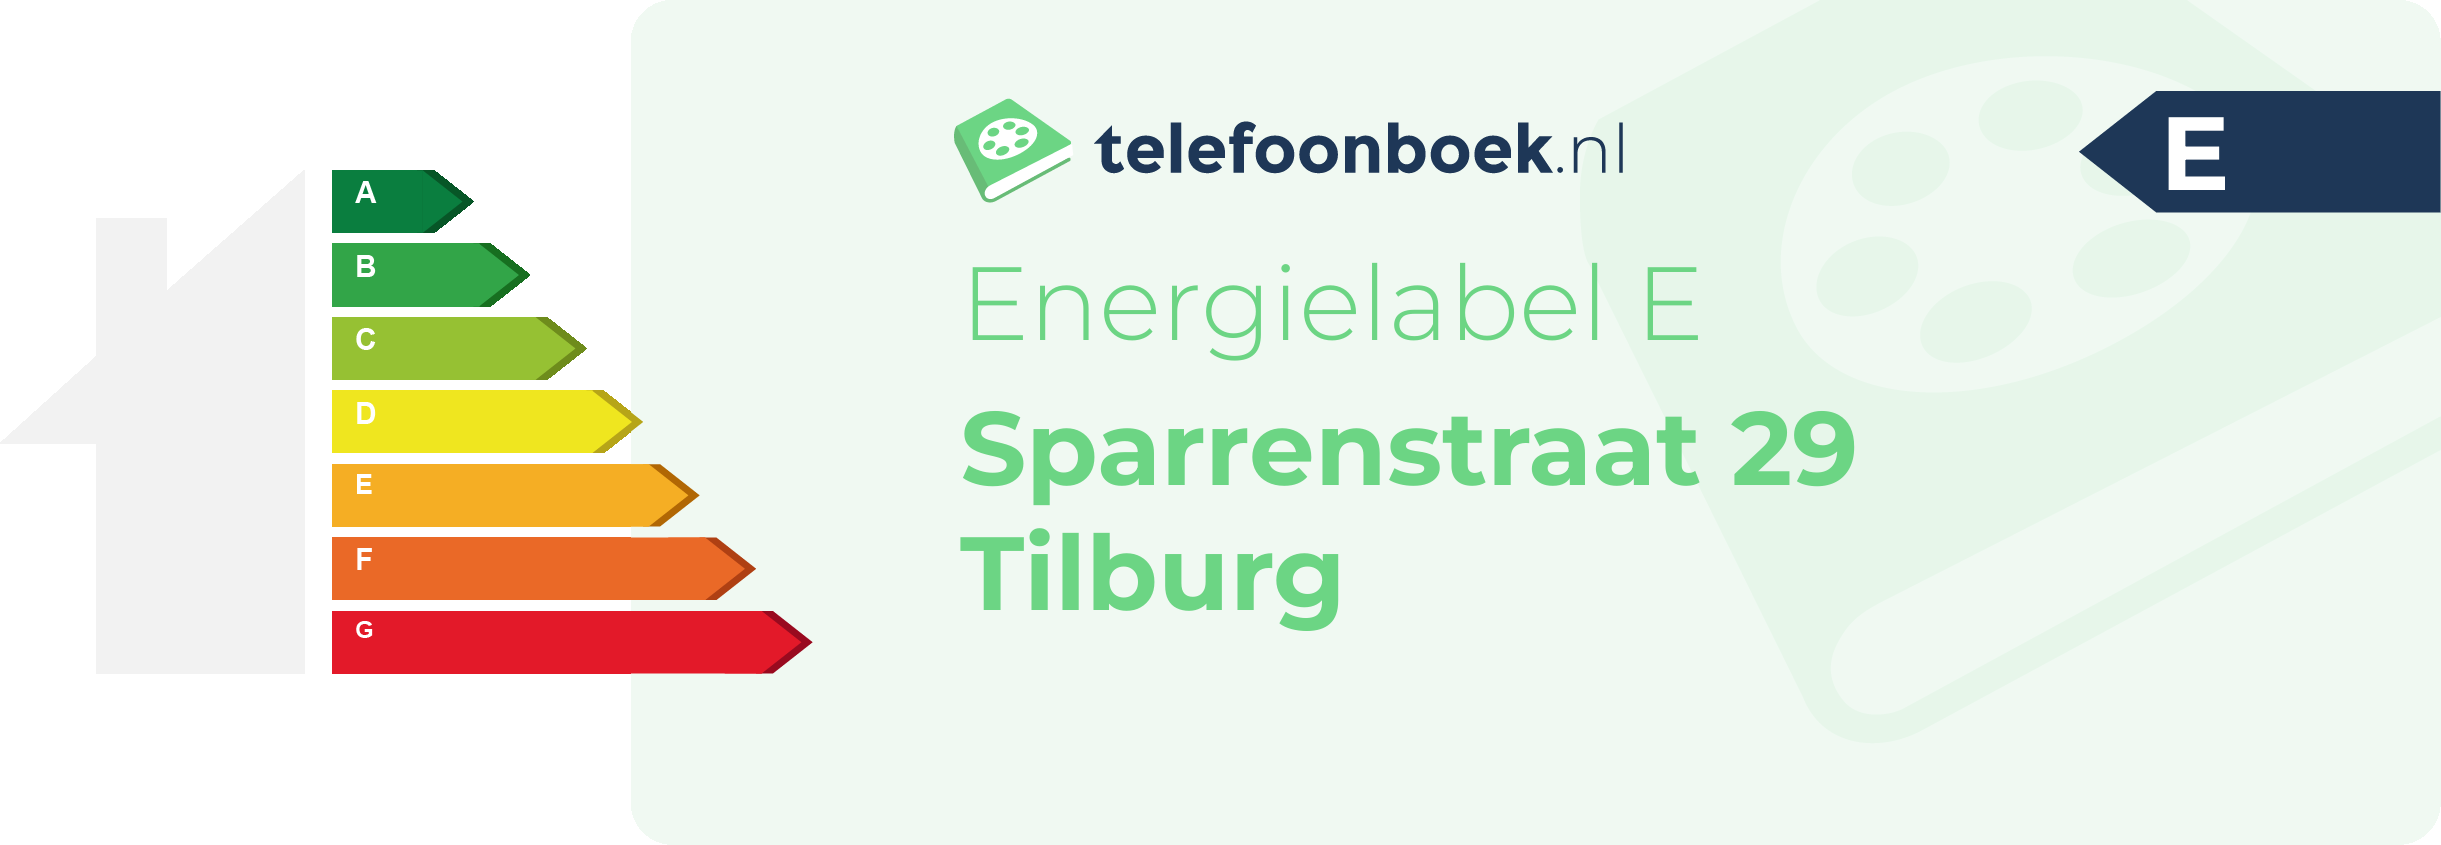 Energielabel Sparrenstraat 29 Tilburg